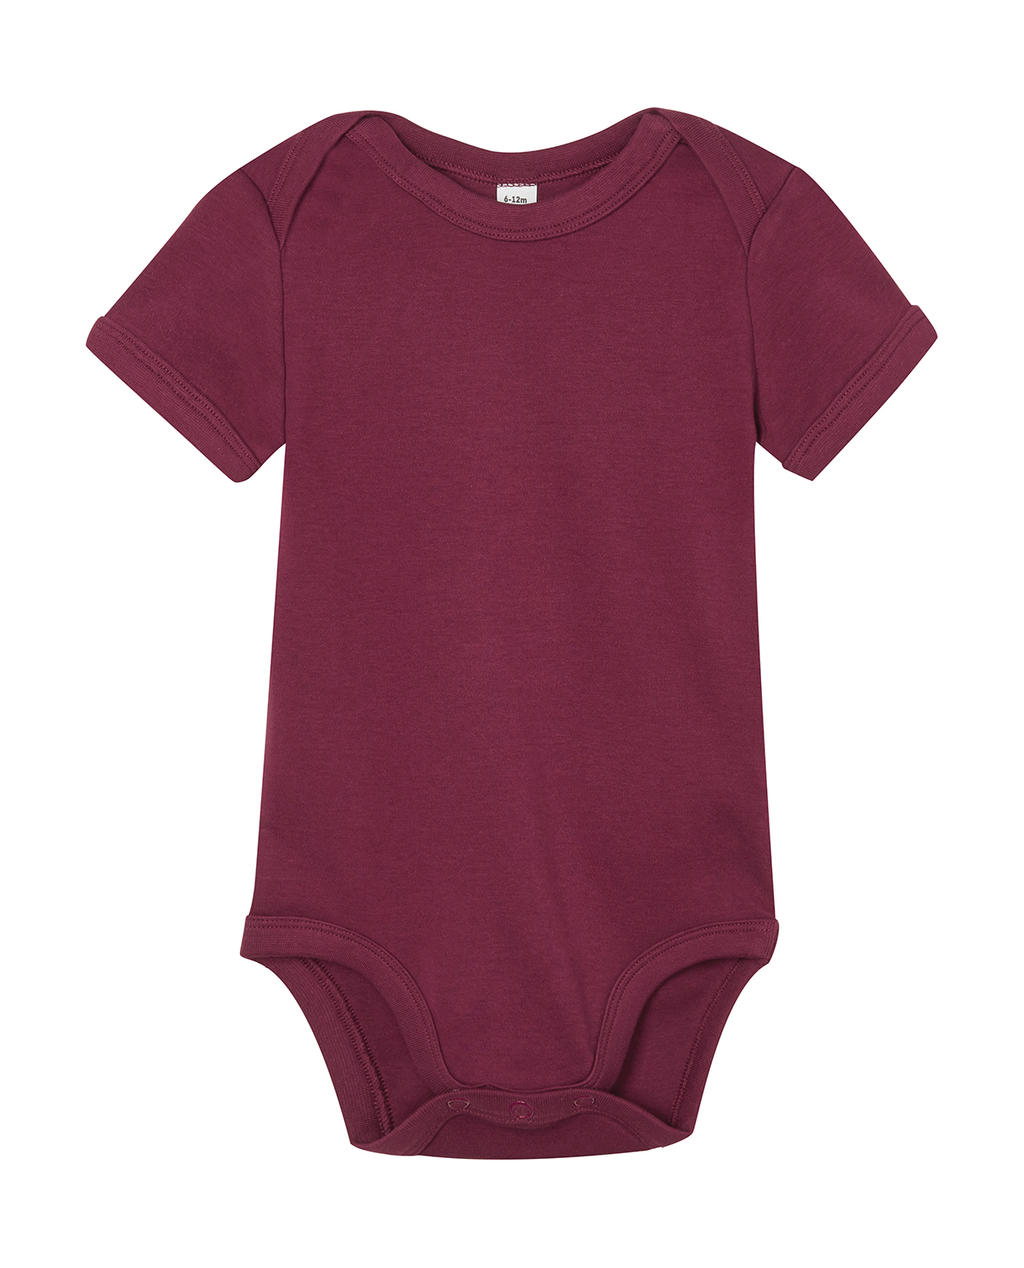  Baby Bodysuit in Farbe Burgundy